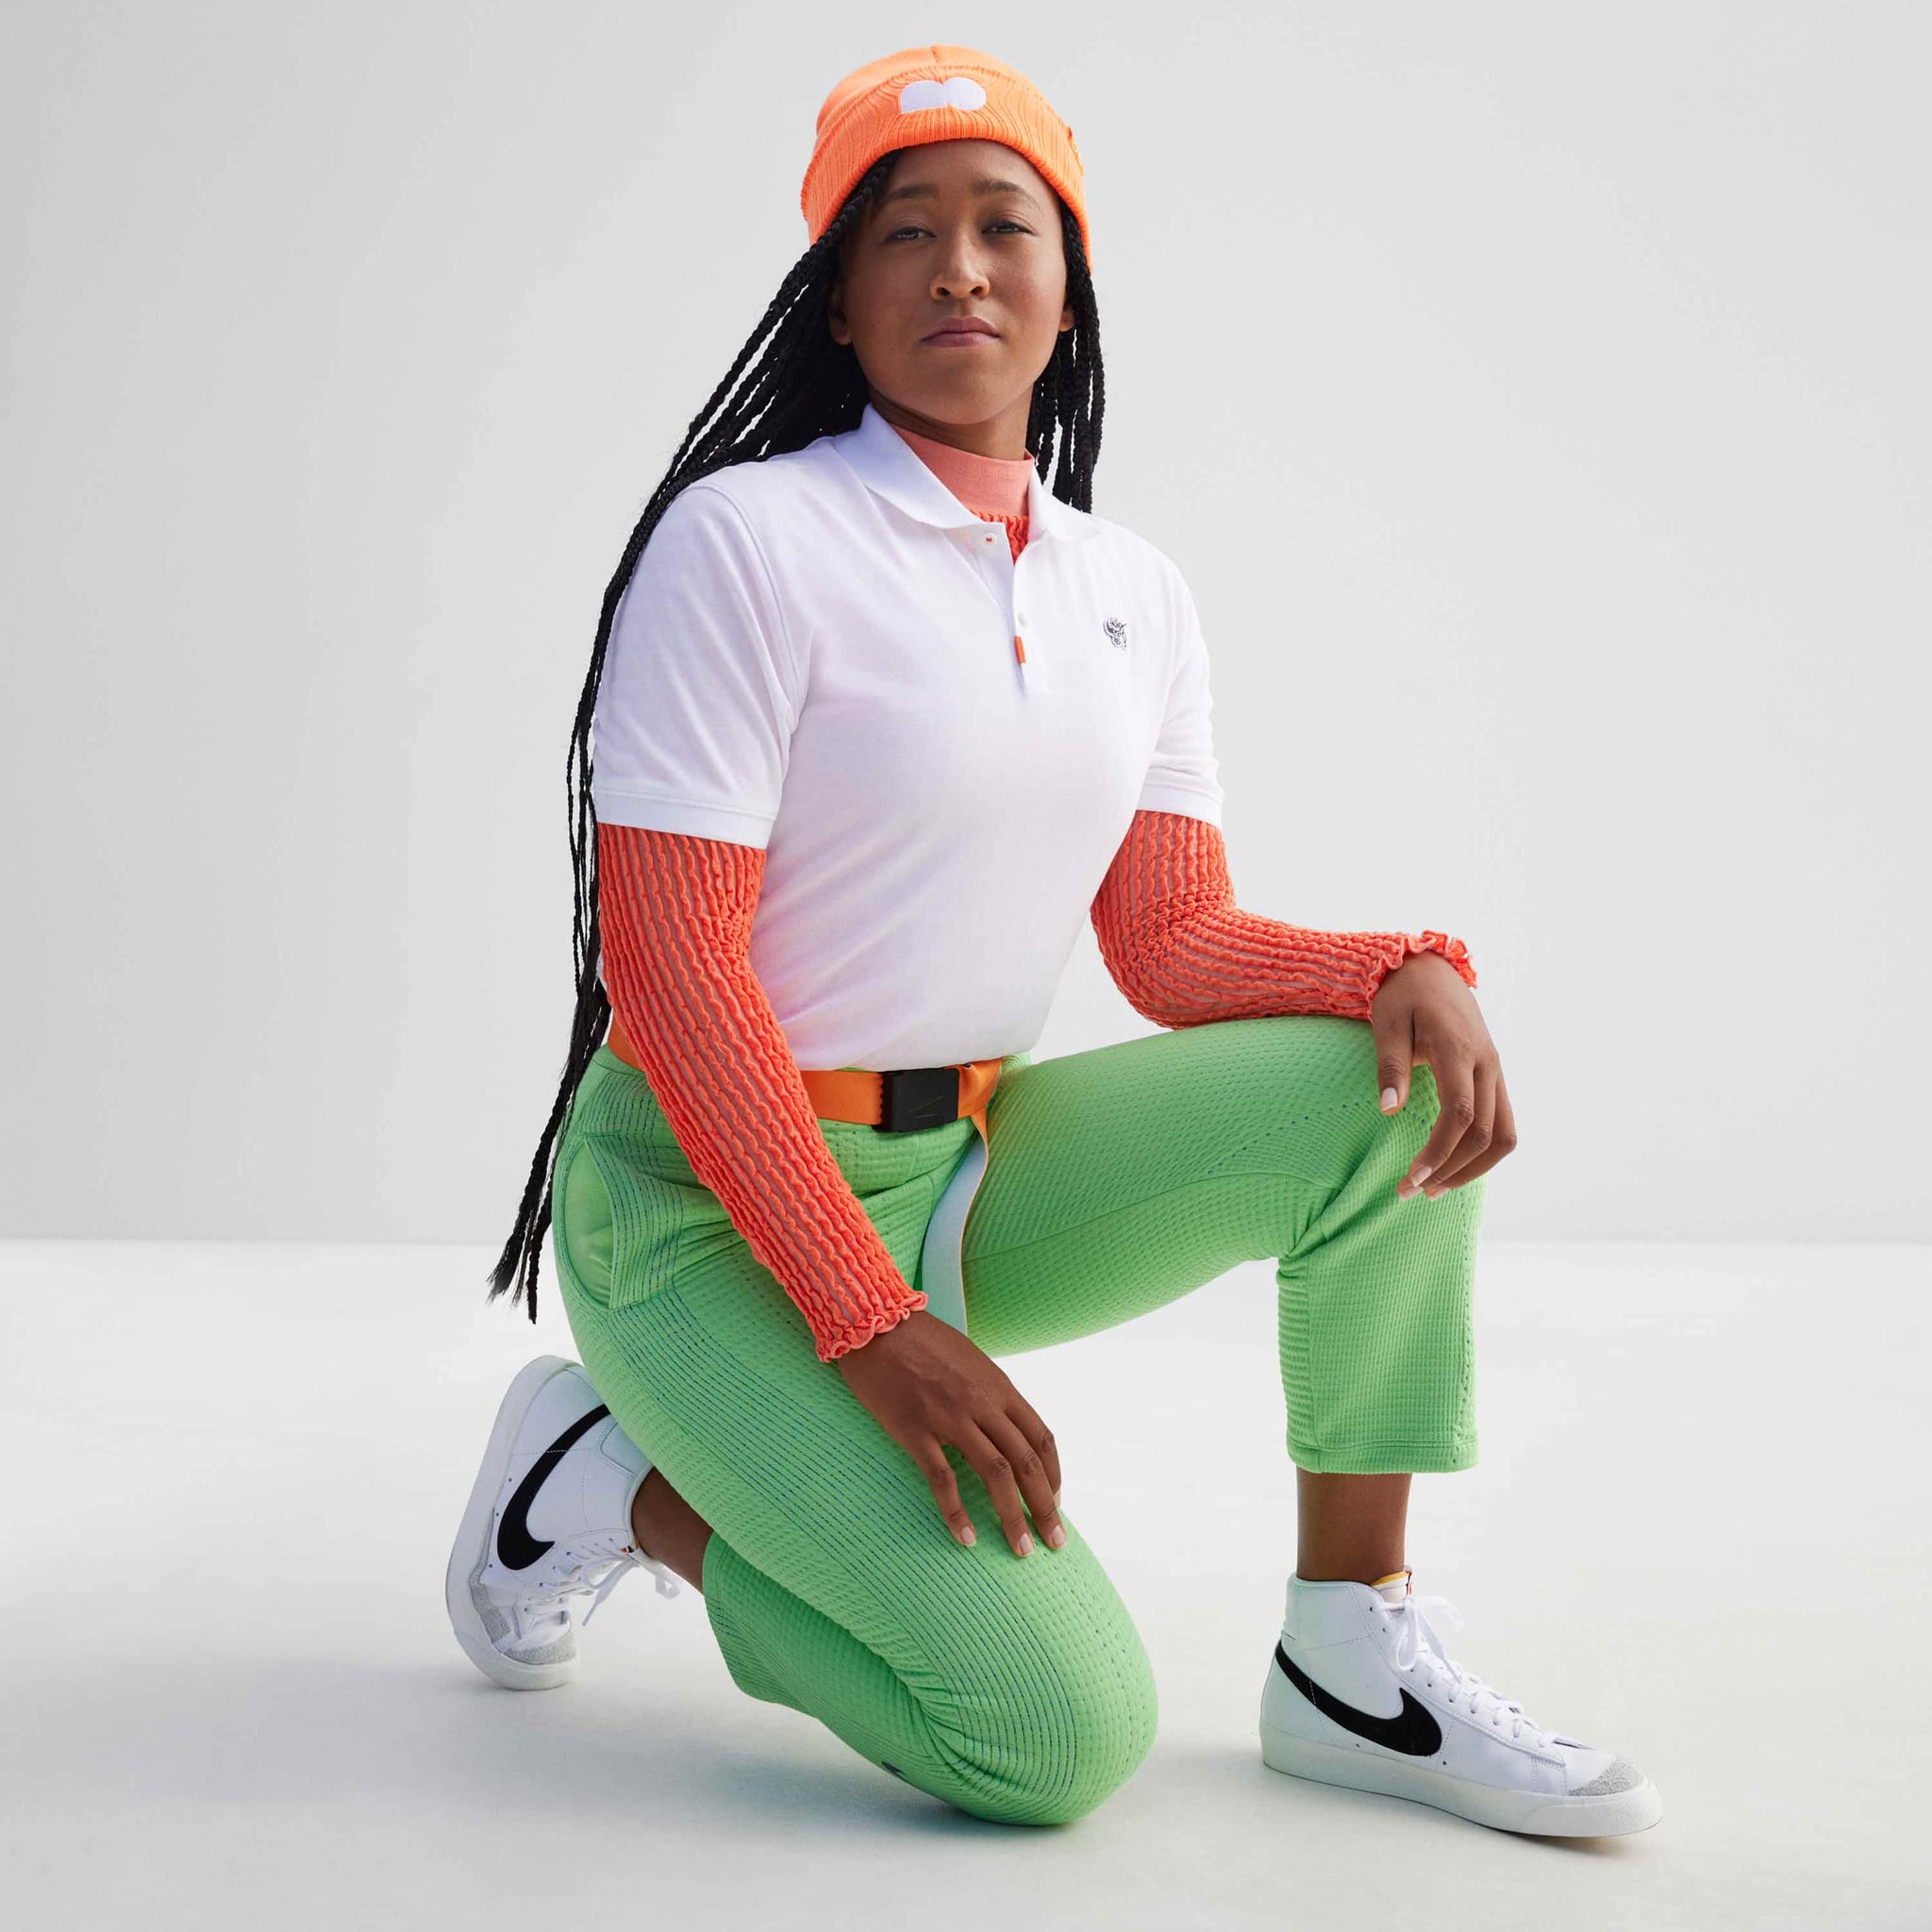 The Nike Polo Naomi Osaka | Naomi Osaka 